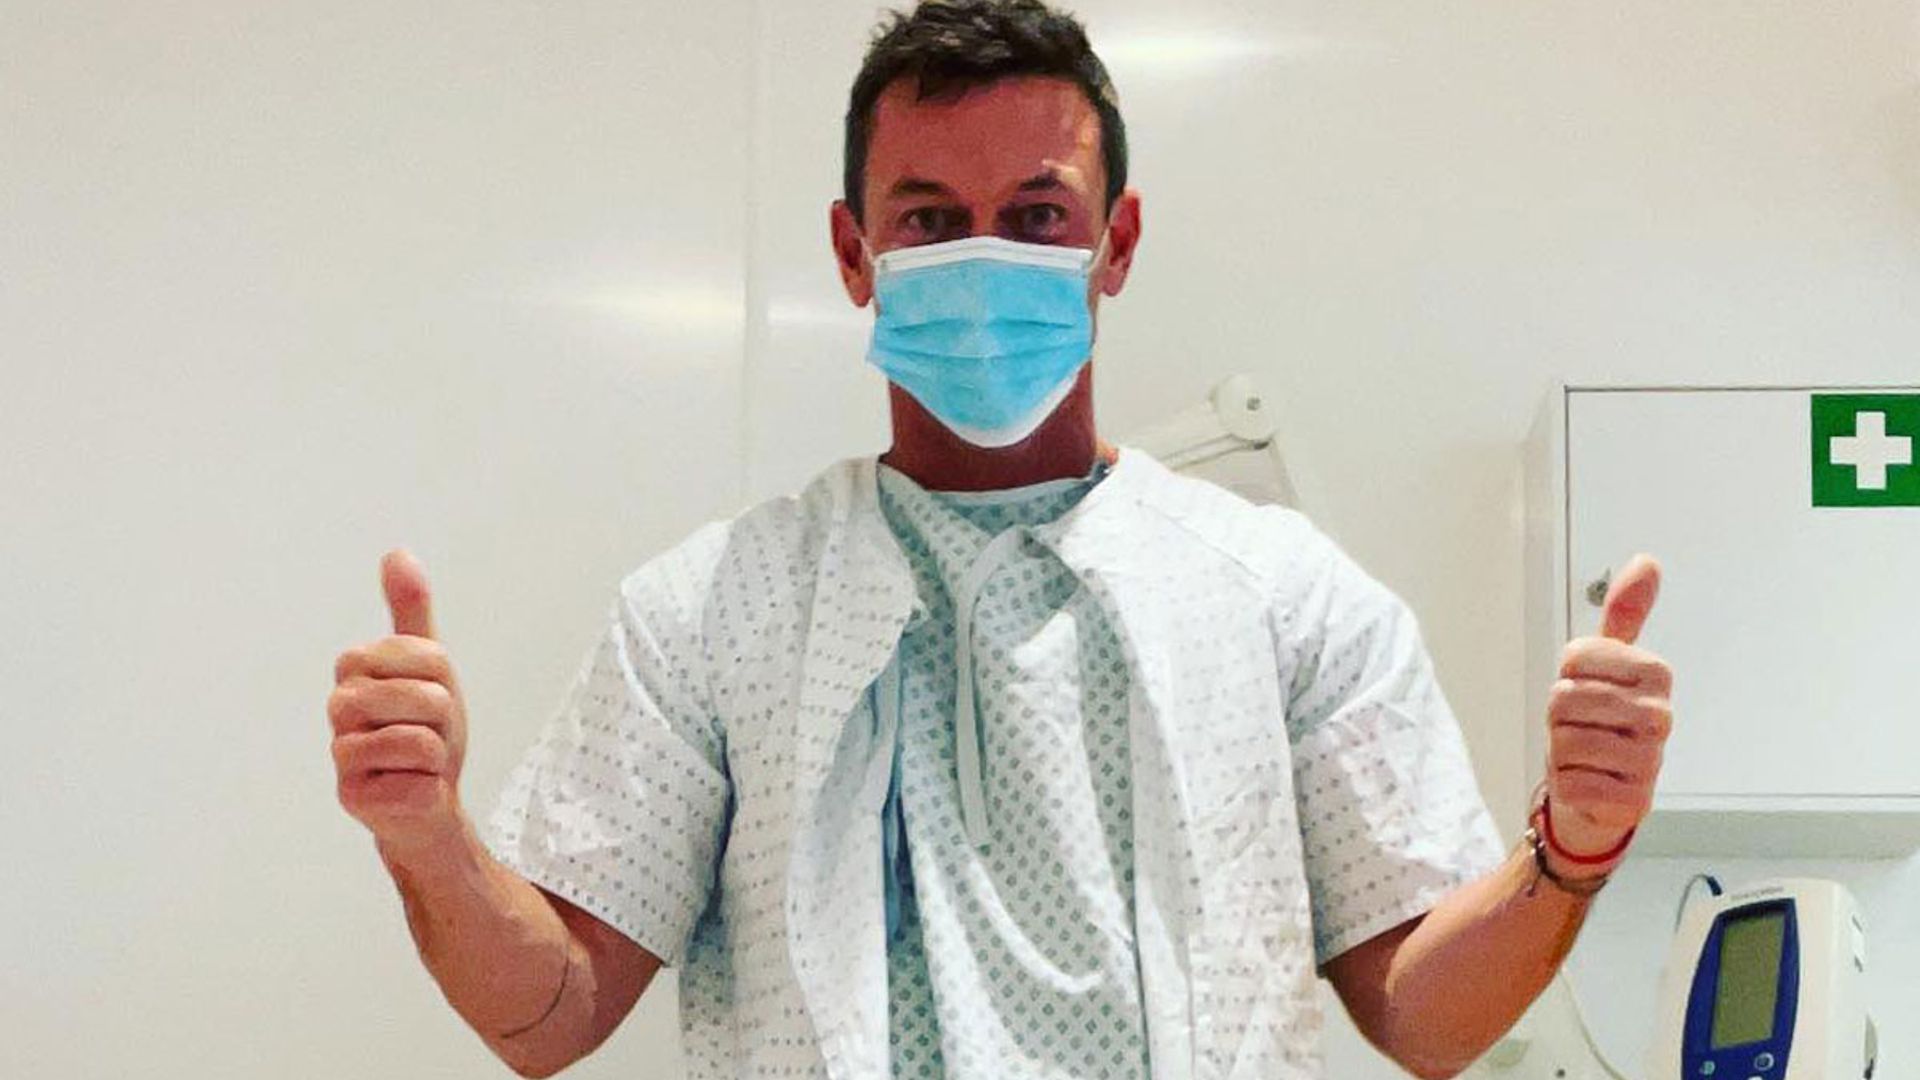 Disney star Luke Evans shares hospital photos – fans react